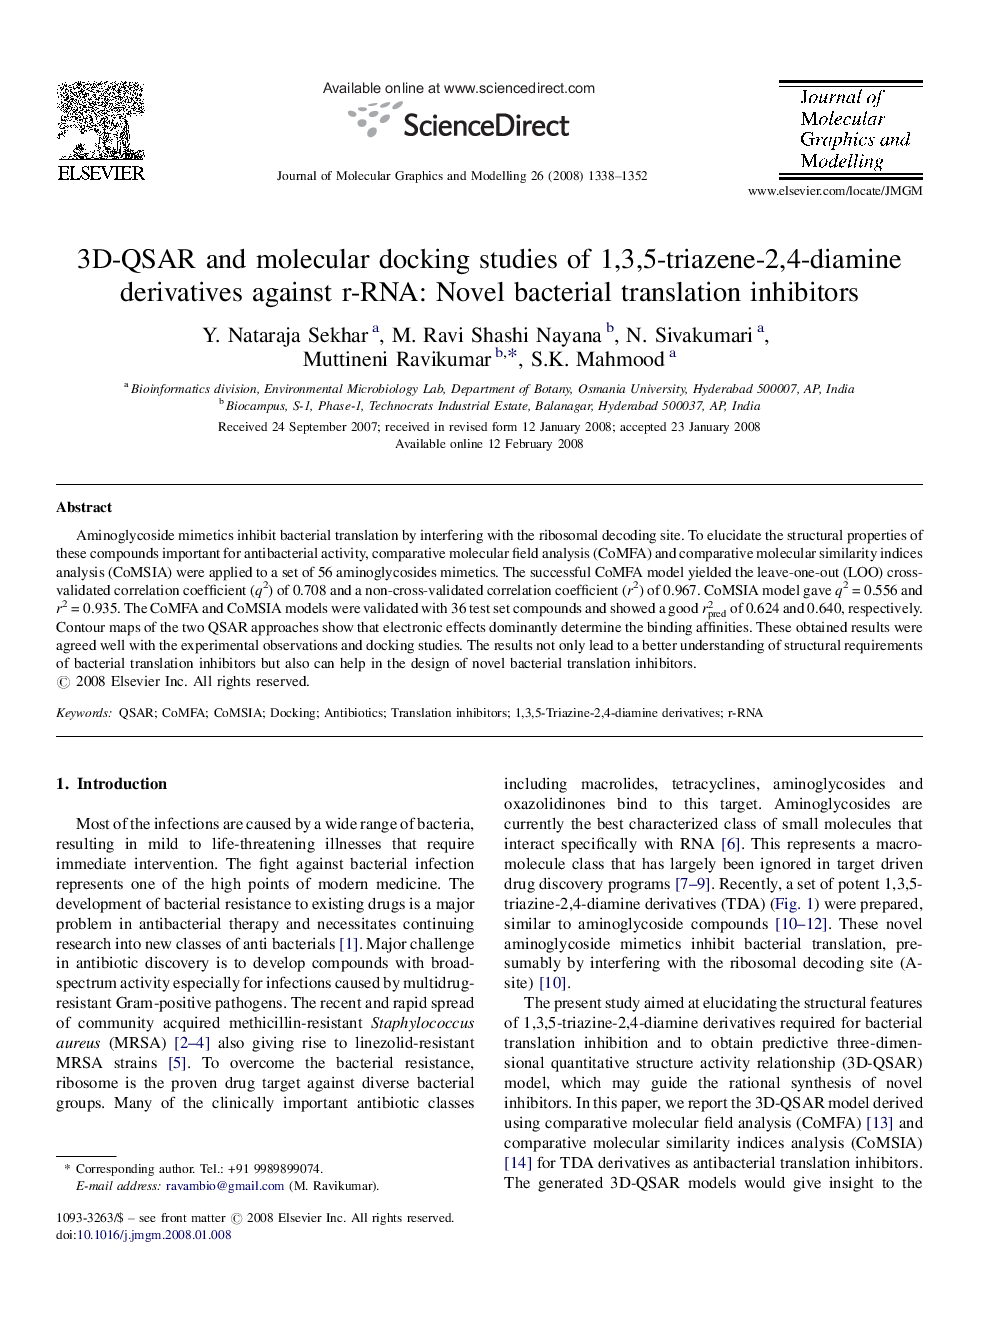 3D-QSAR and molecular docking studies of 1,3,5-triazene-2,4-diamine derivatives against r-RNA: Novel bacterial translation inhibitors